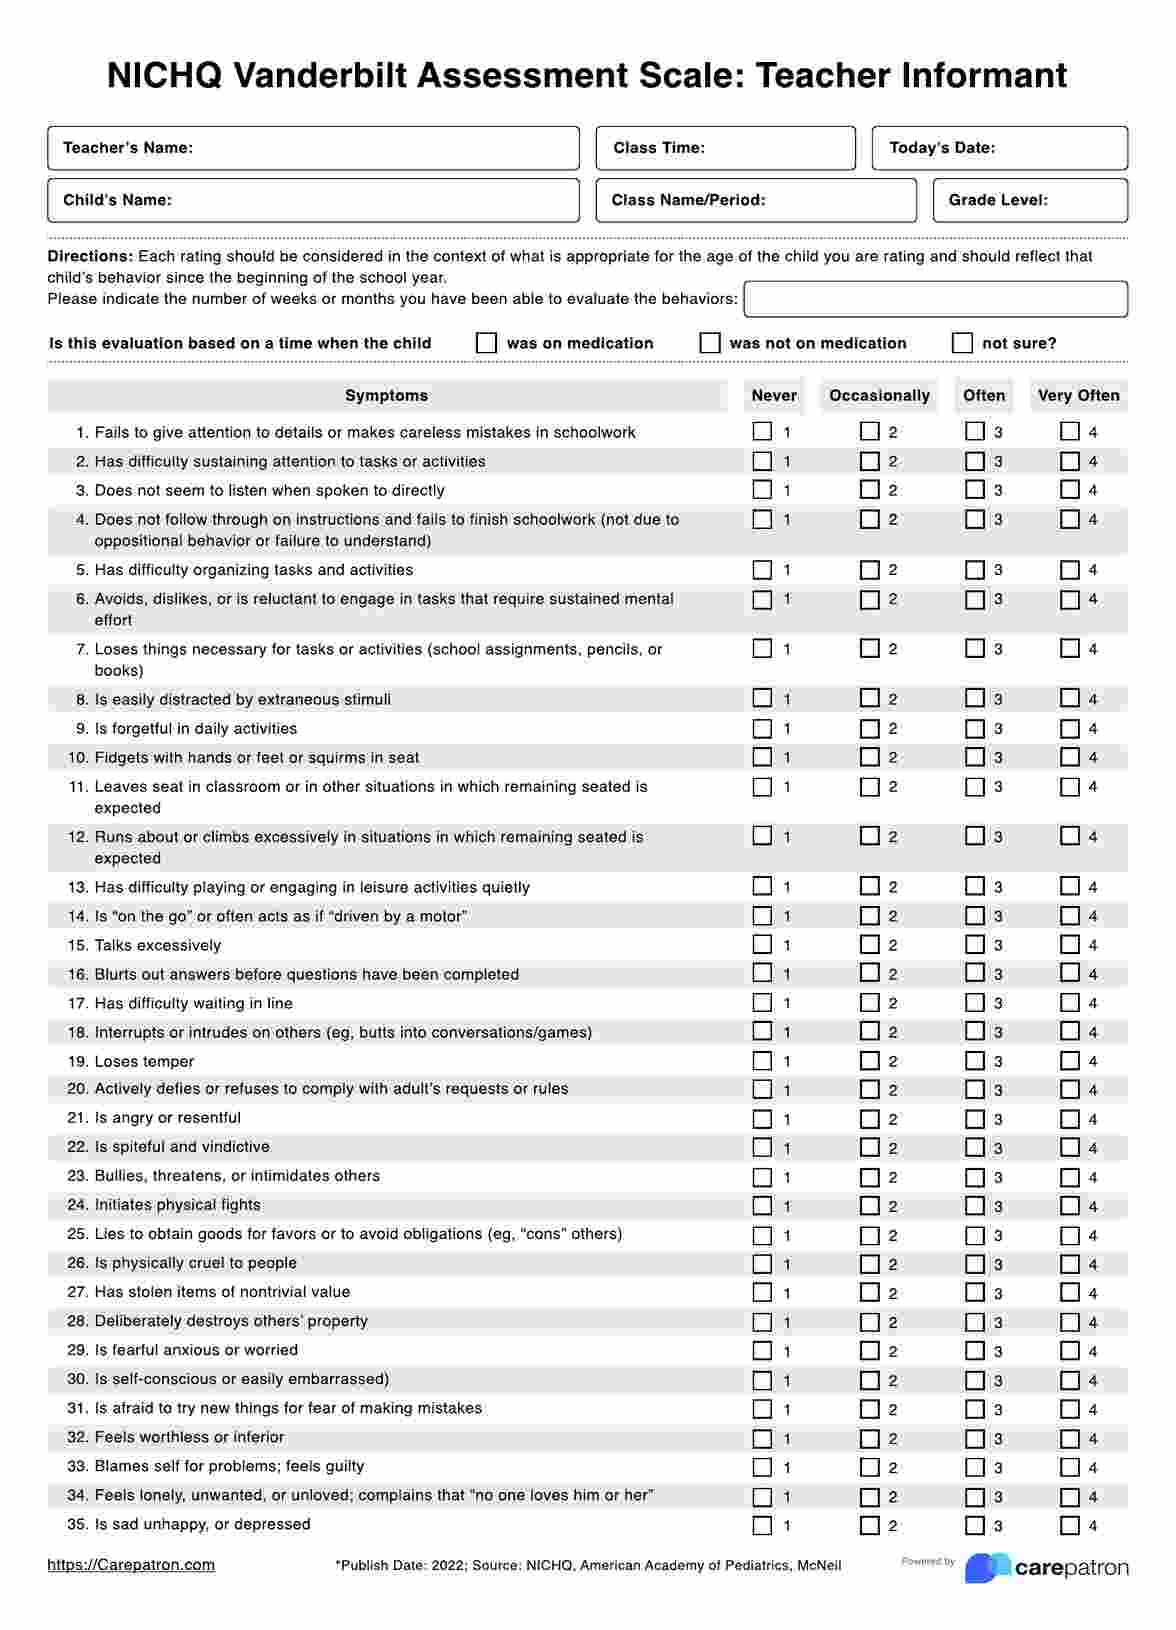 NICHQ Vanderbilt Assessment Scale for Teachers PDF Example